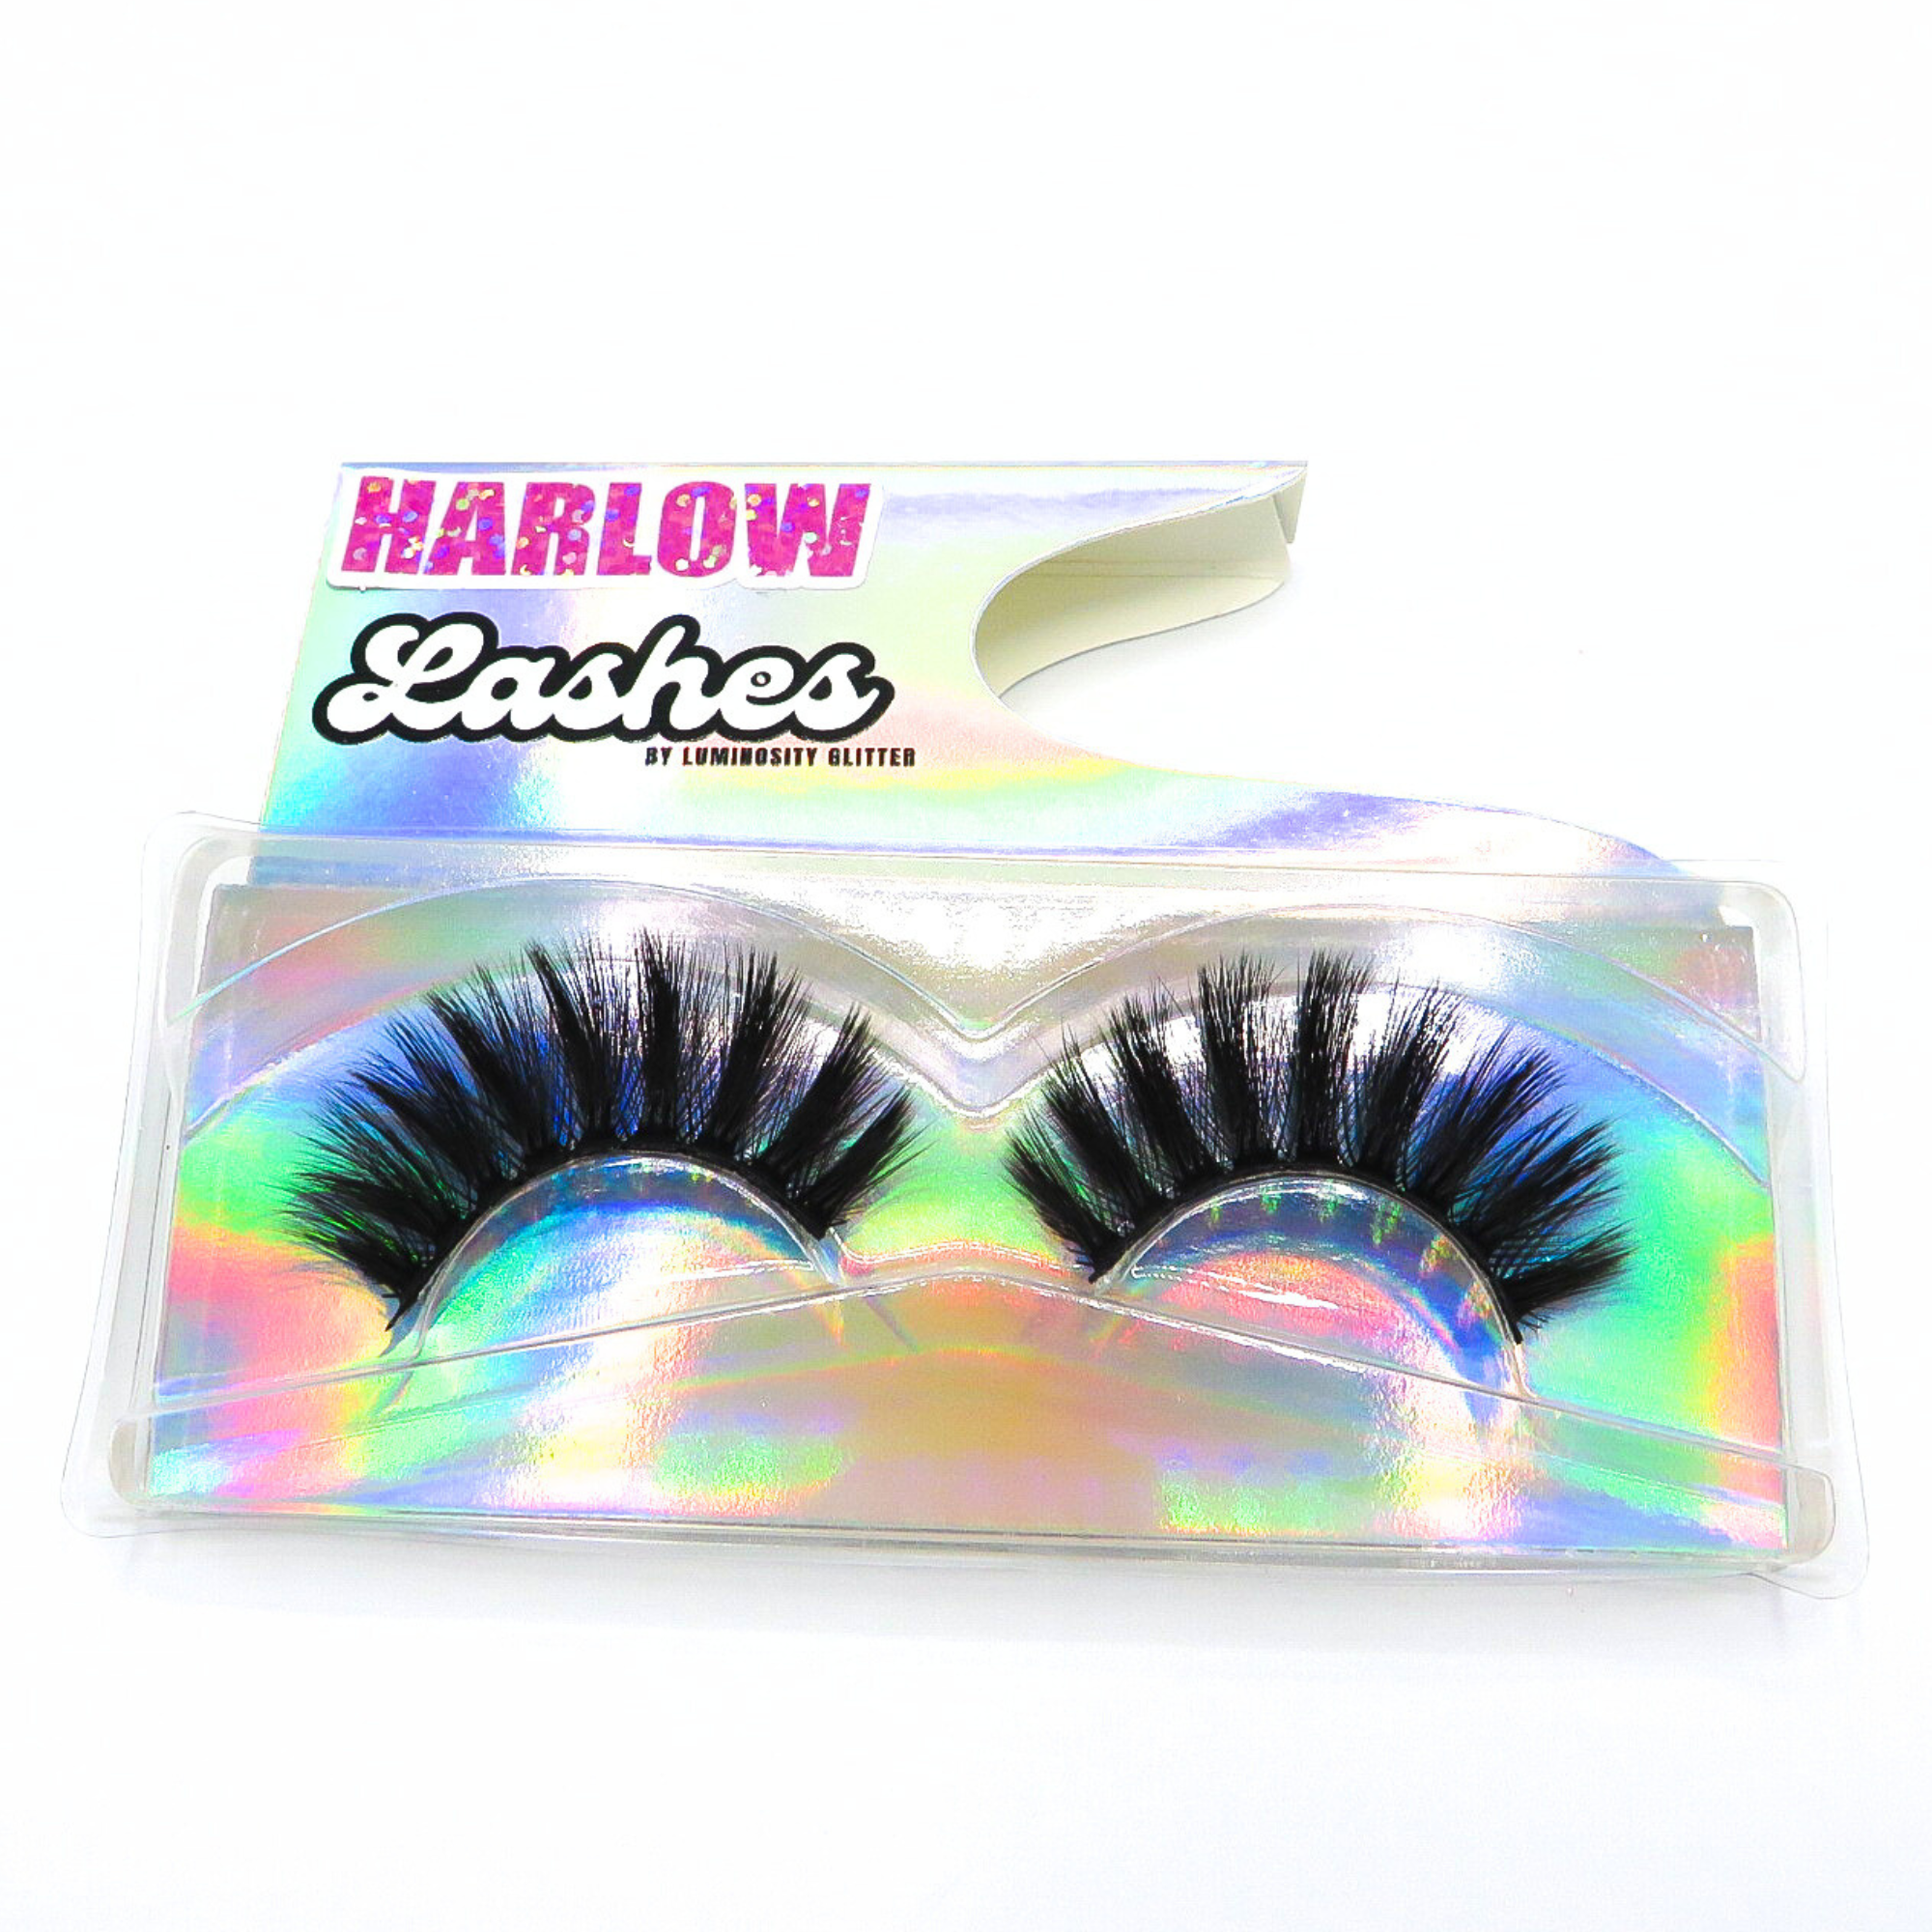 Harlow strip lashes pair by Luminosity Glitter